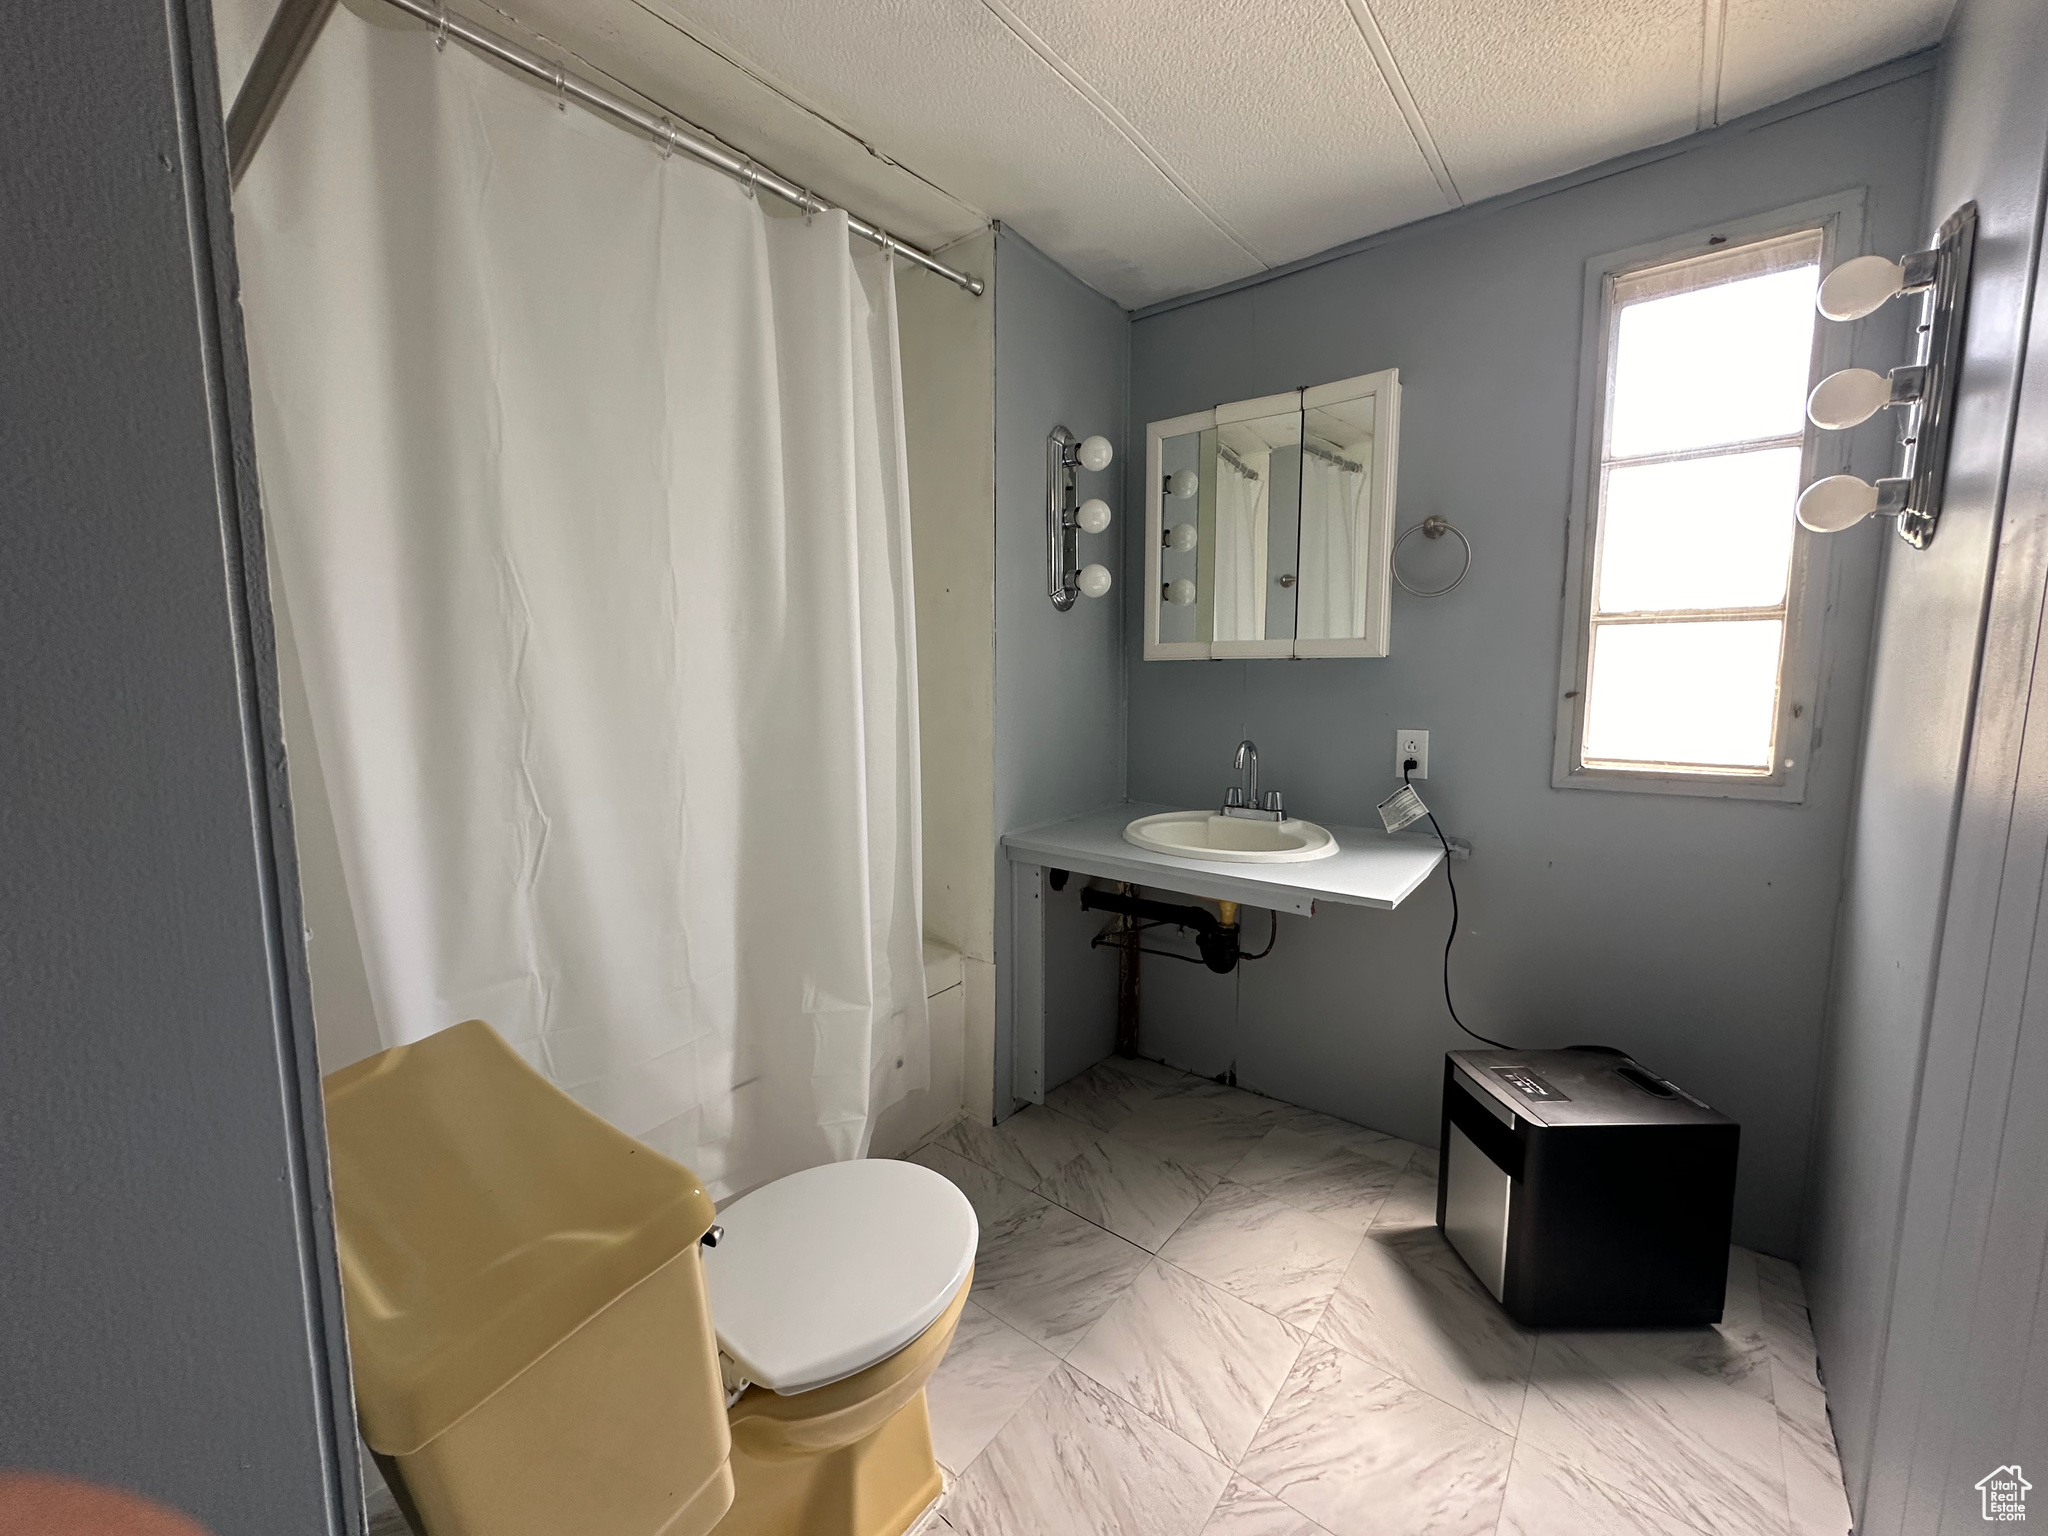 Full bathroom featuring tile floors, shower / tub combo, toilet, and vanity